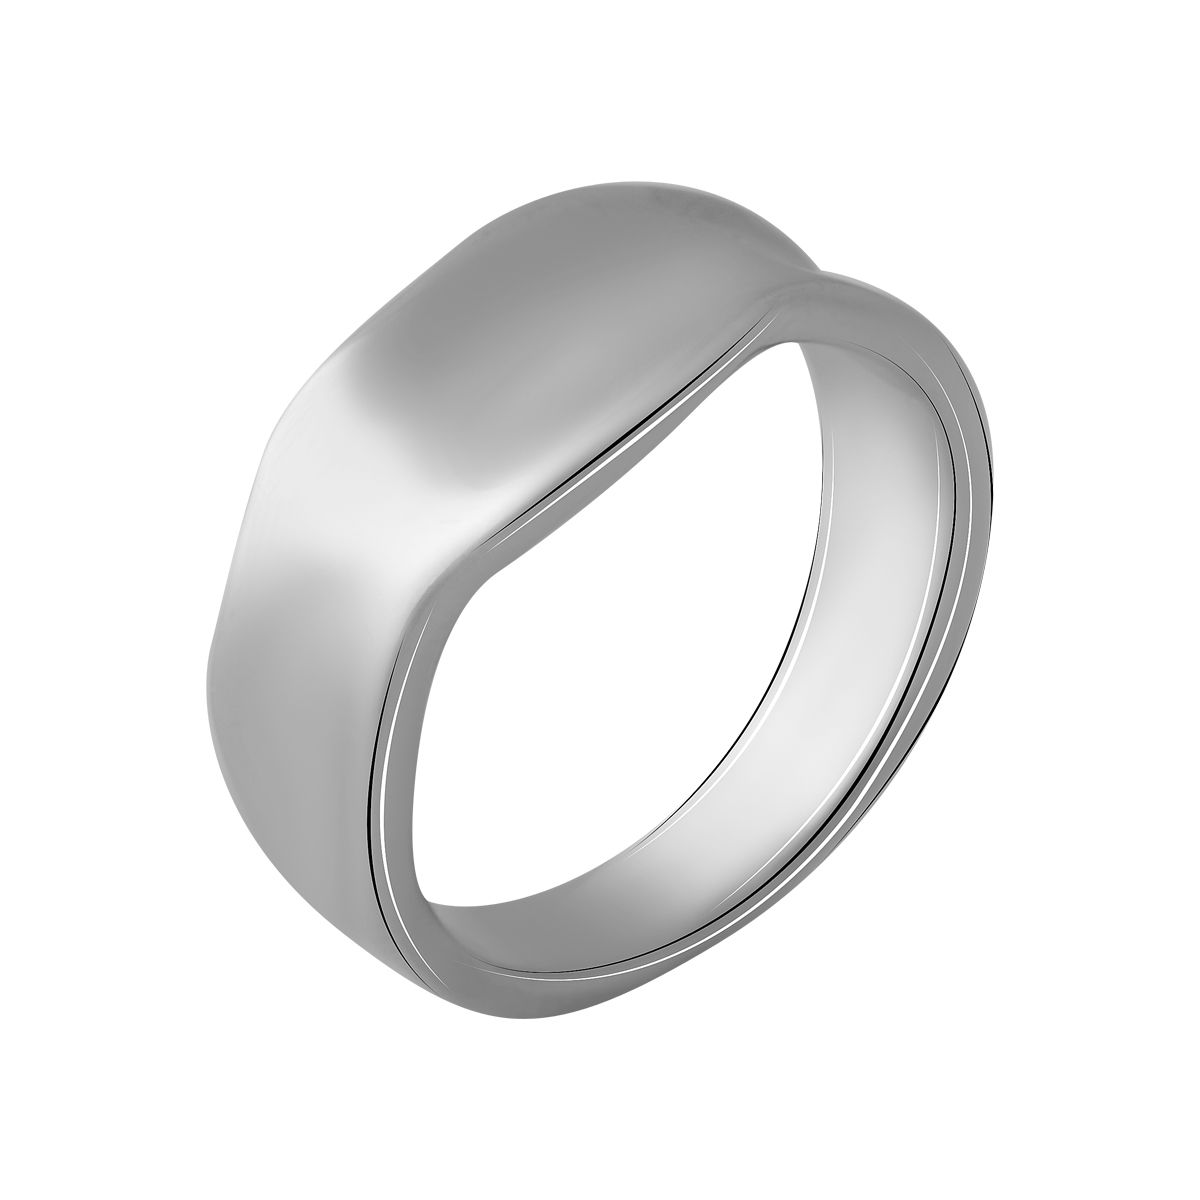 Серебряное кольцо SilverBreeze без камней (2056744) 18.5 размер